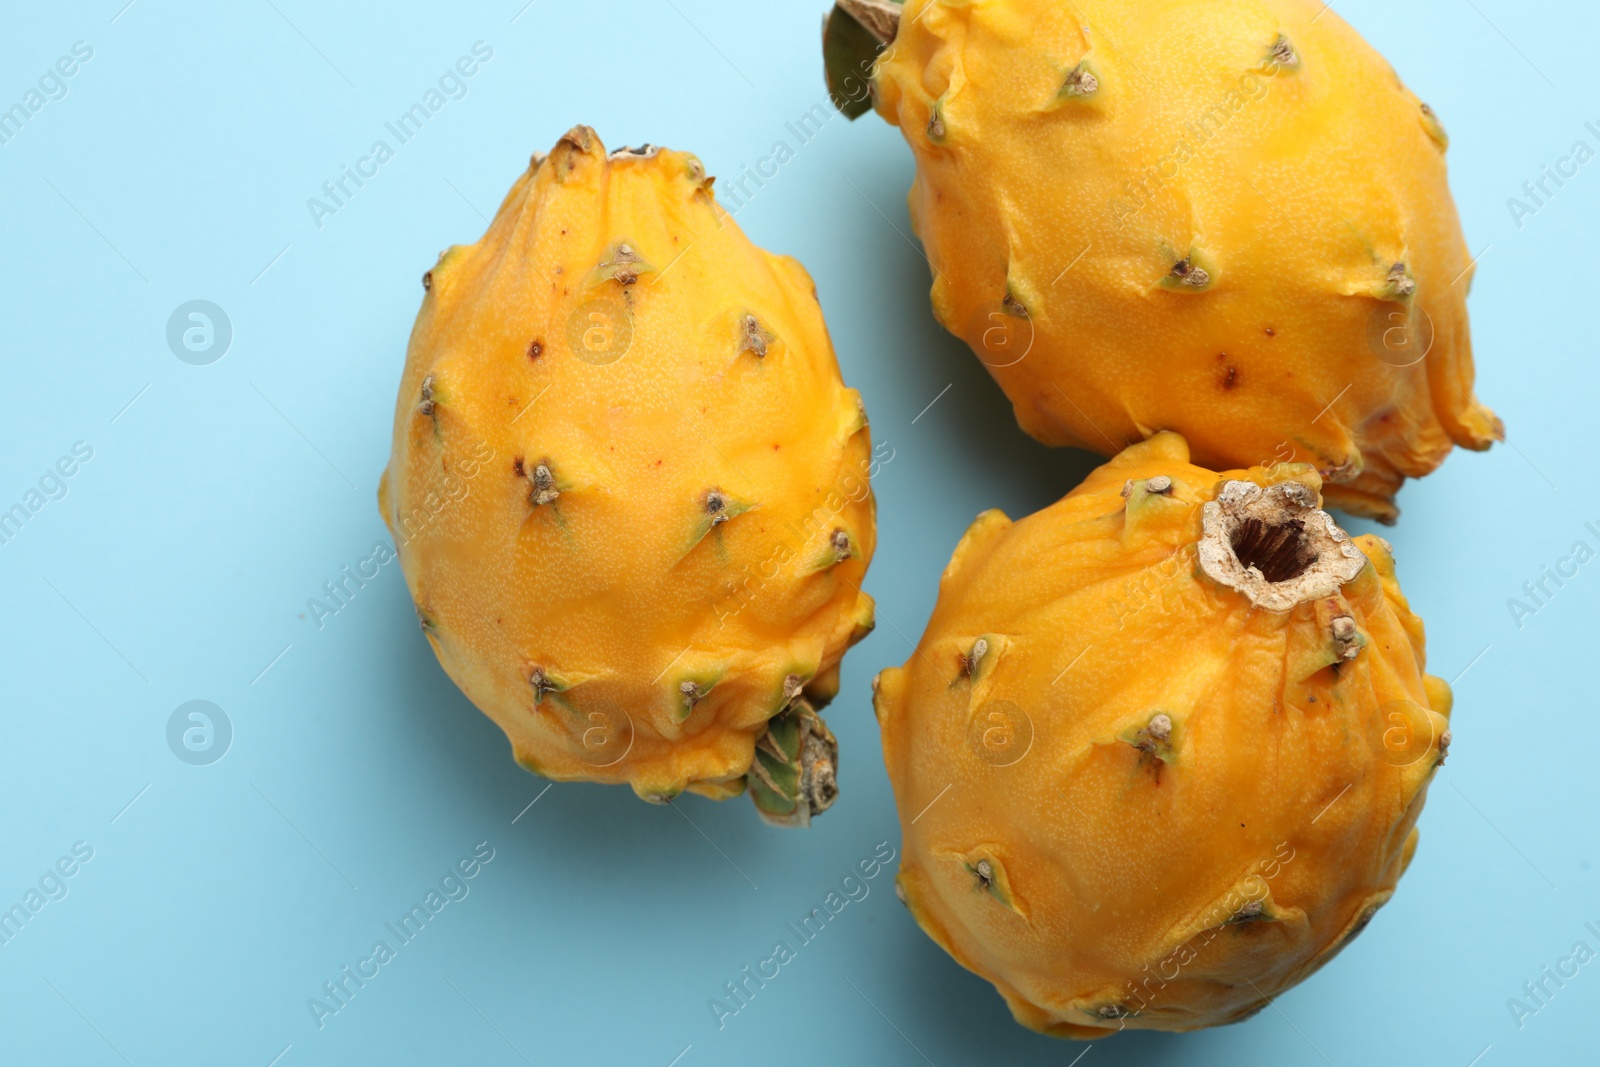 Photo of Delicious yellow pitahaya fruits on light blue background, flat lay